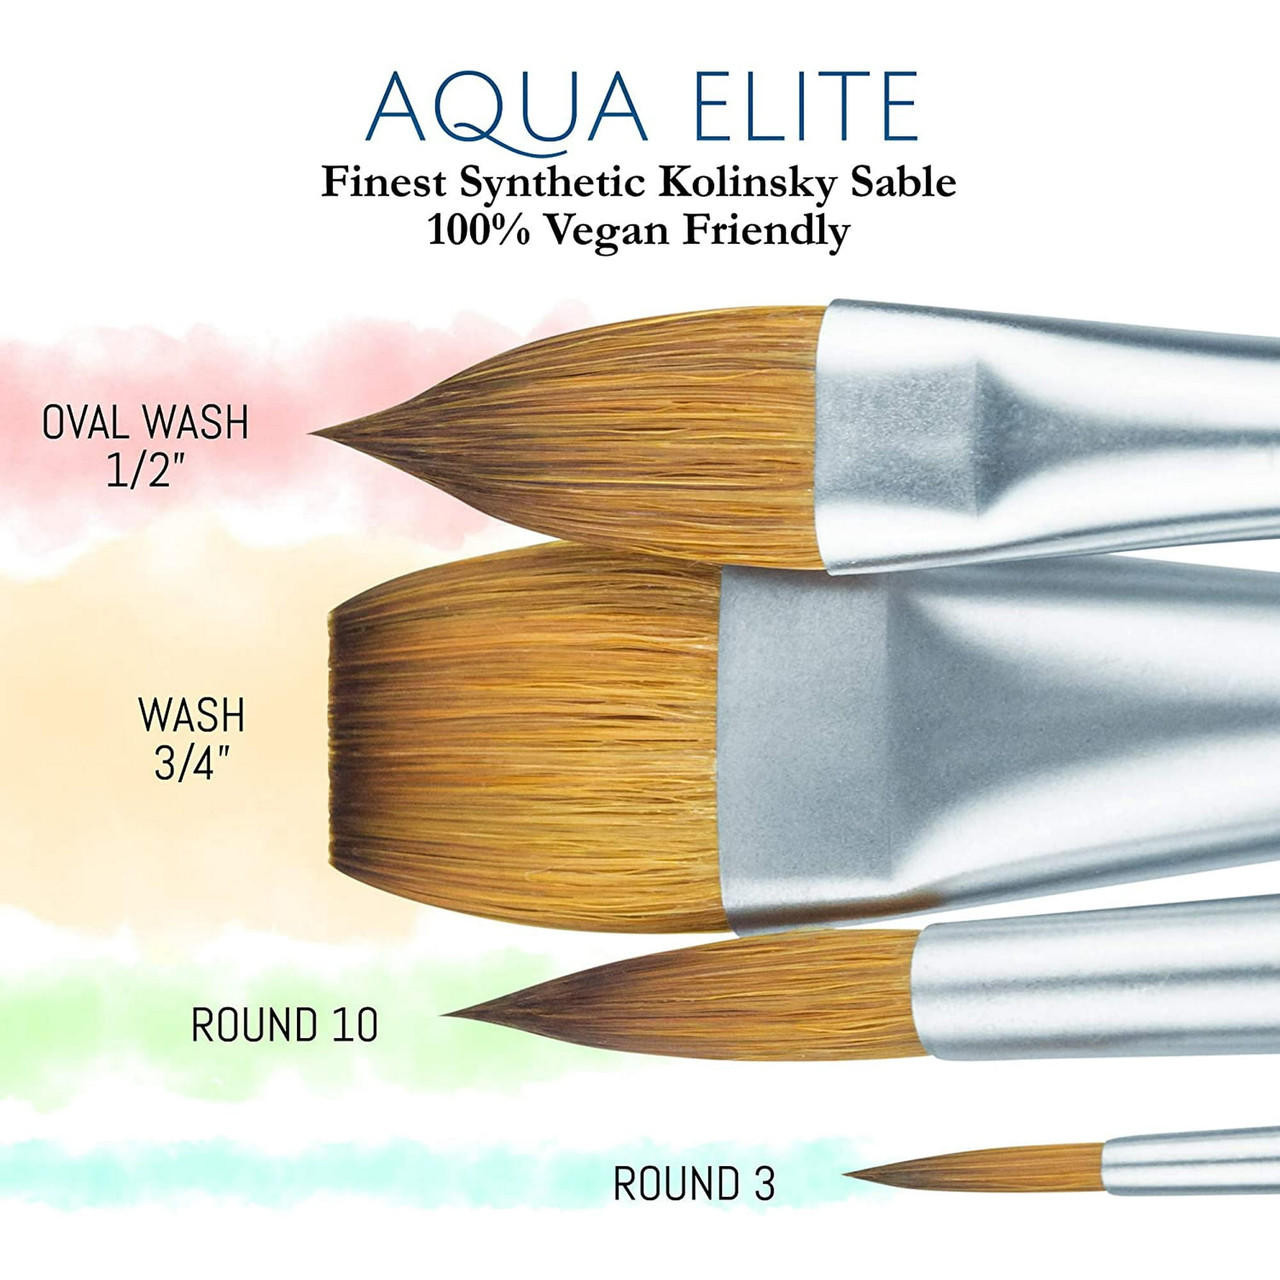 Princeton Aqua Elite Series 4850 Synthetic Watercolor Brushes